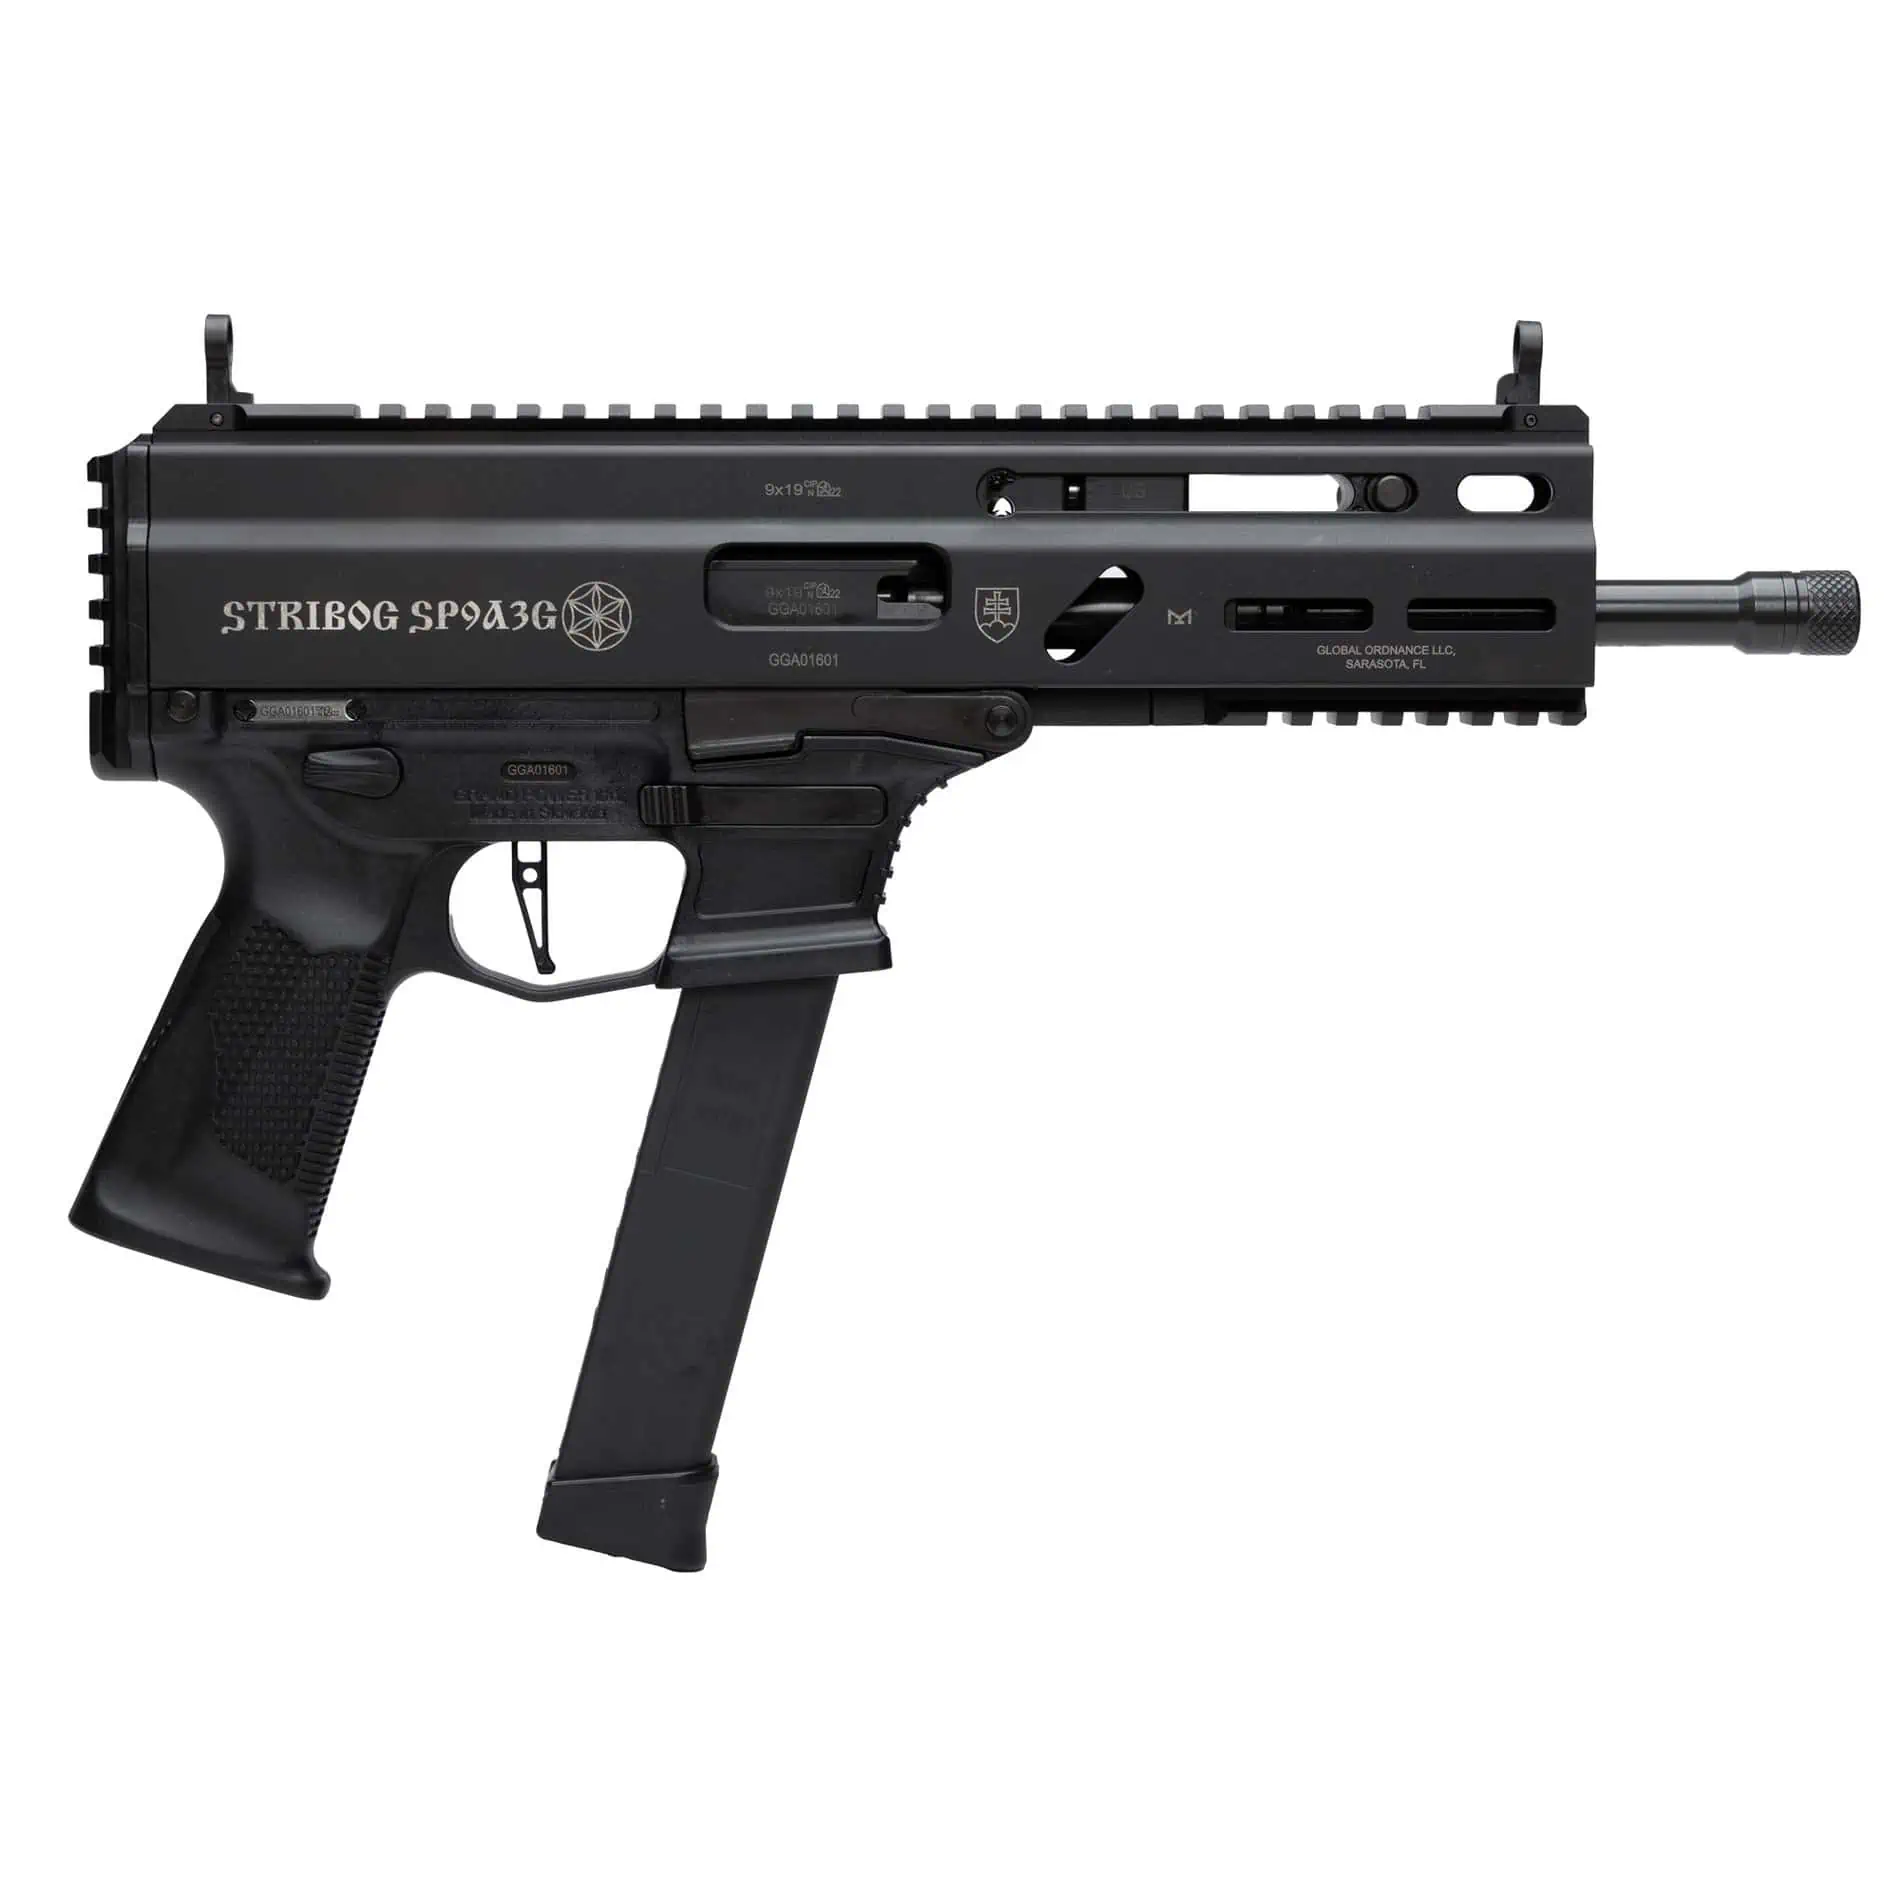 Grand Power Stribog SP9A3G 8” 9mm Pistol - 33 Rounds - Glock Mag Compatible - Roller Delayed